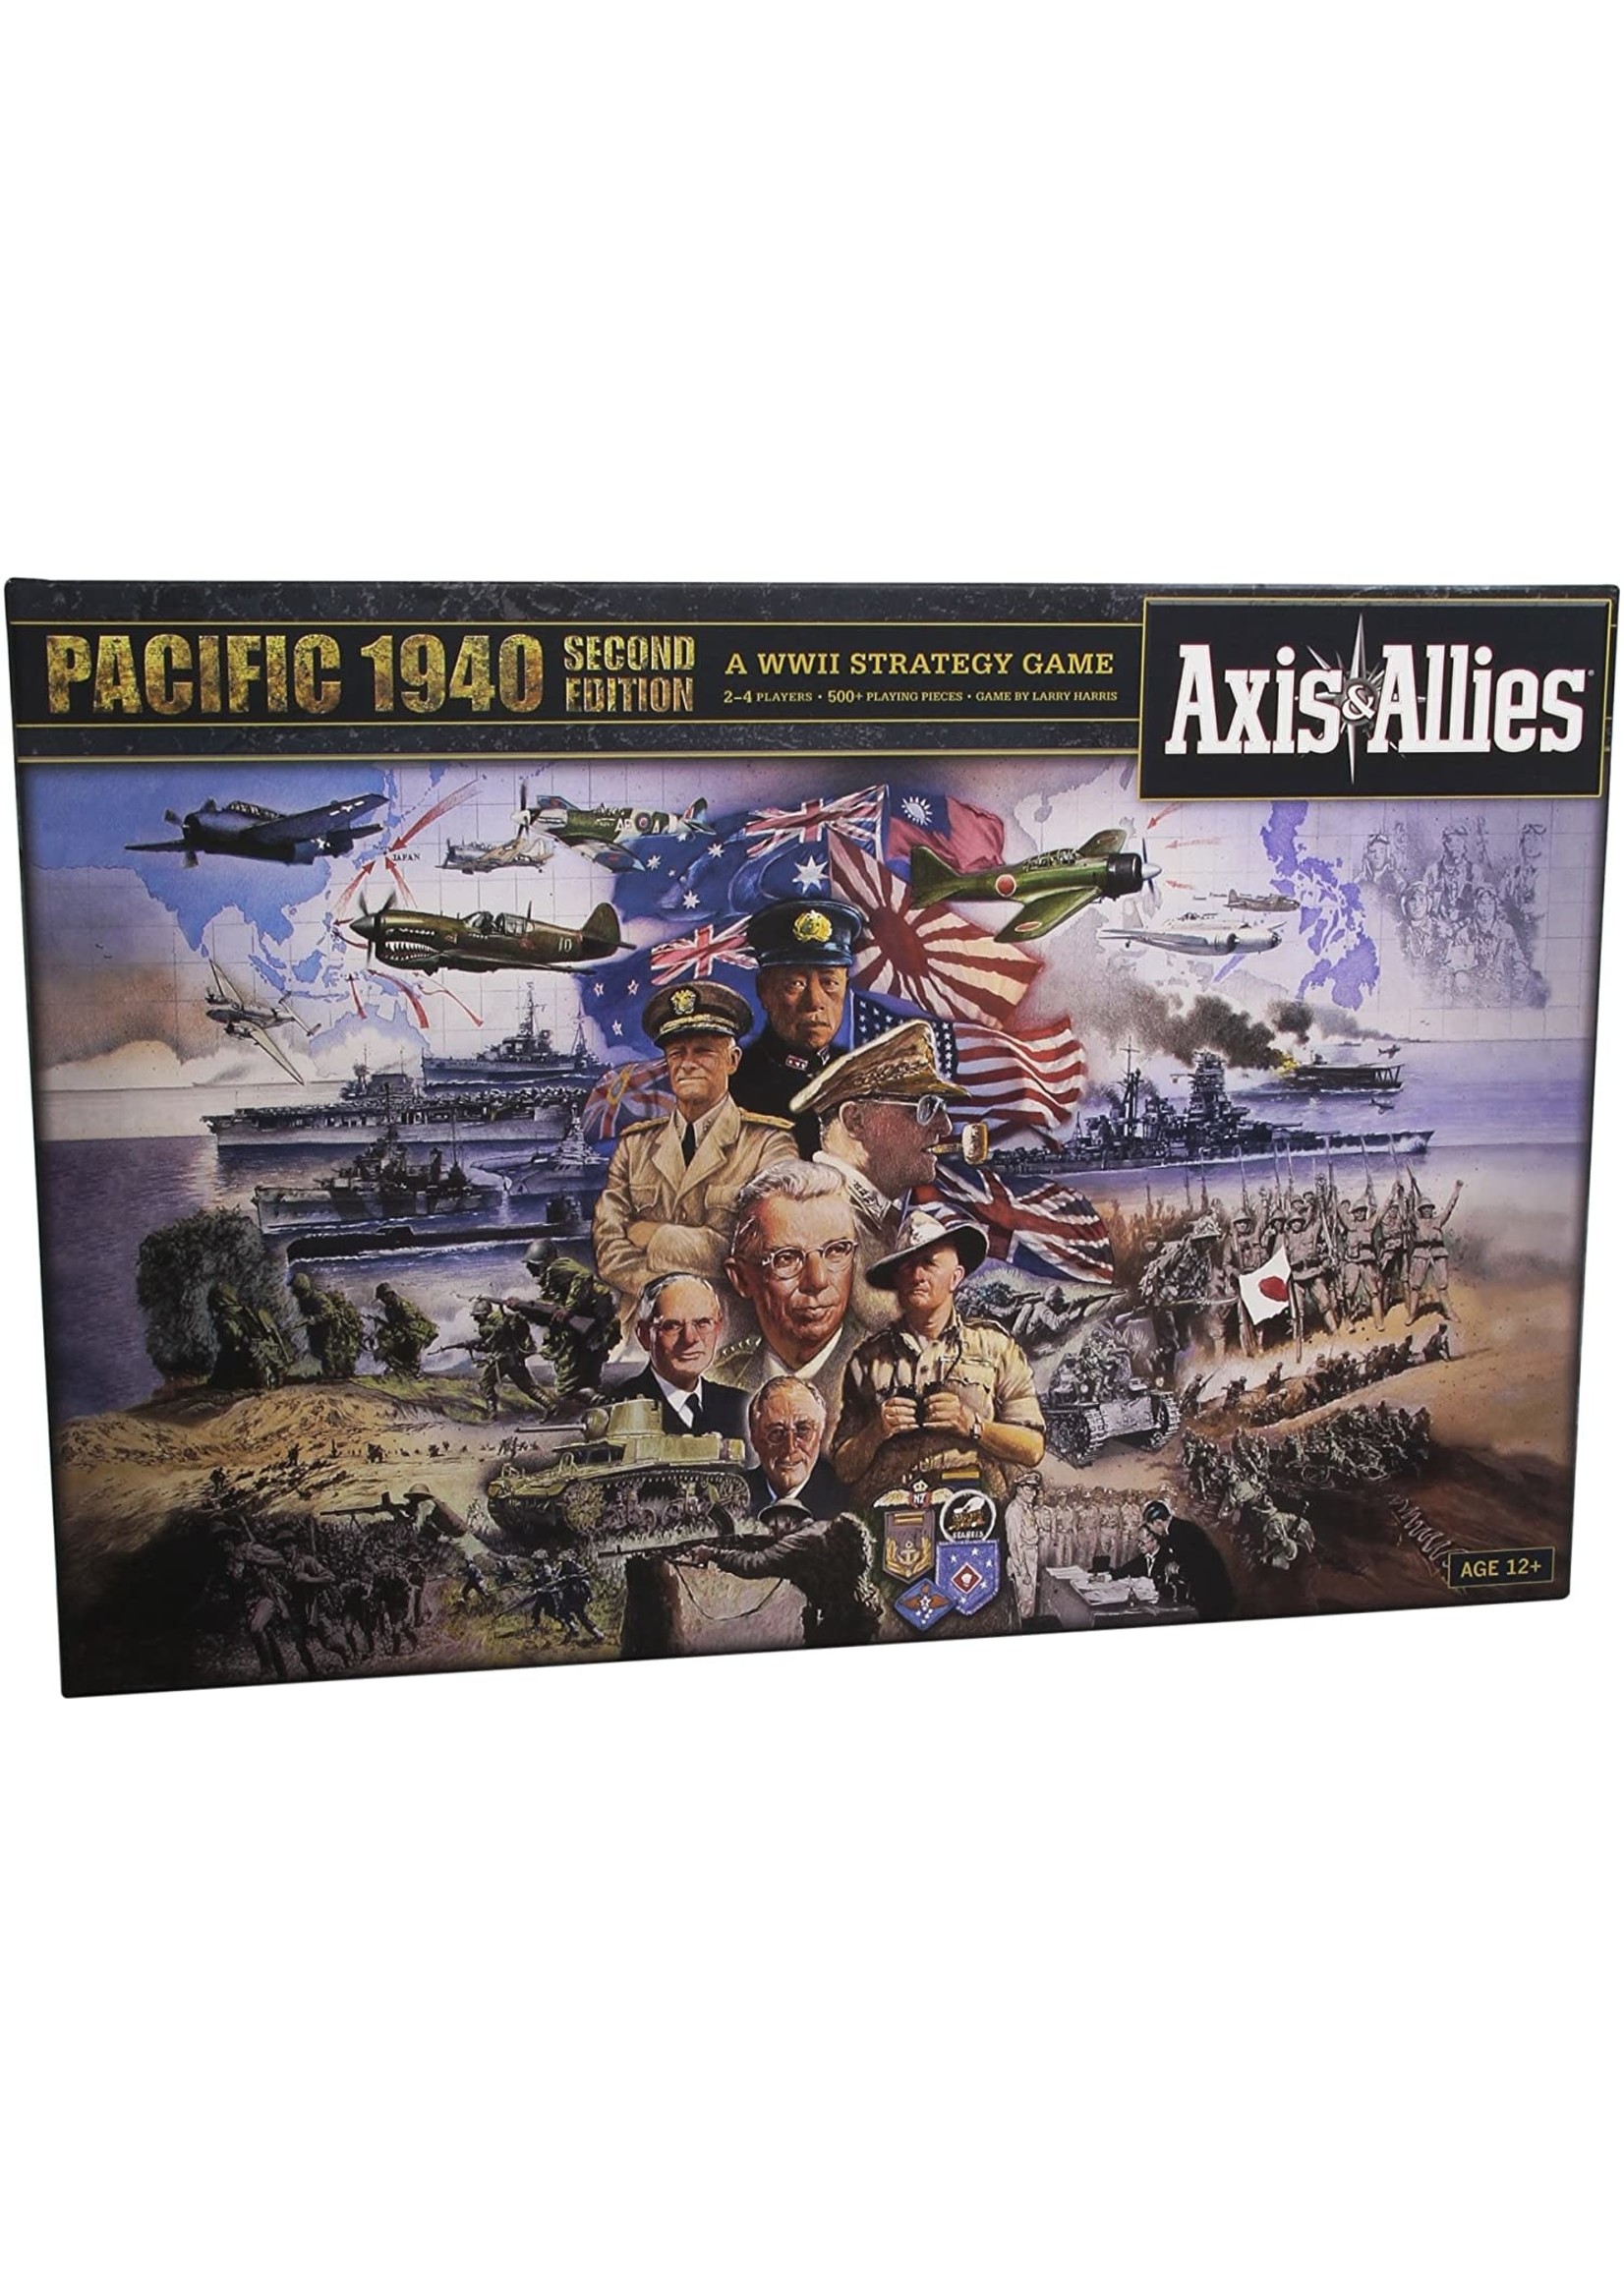 Hasbro Axis & Allies Pacific 1940